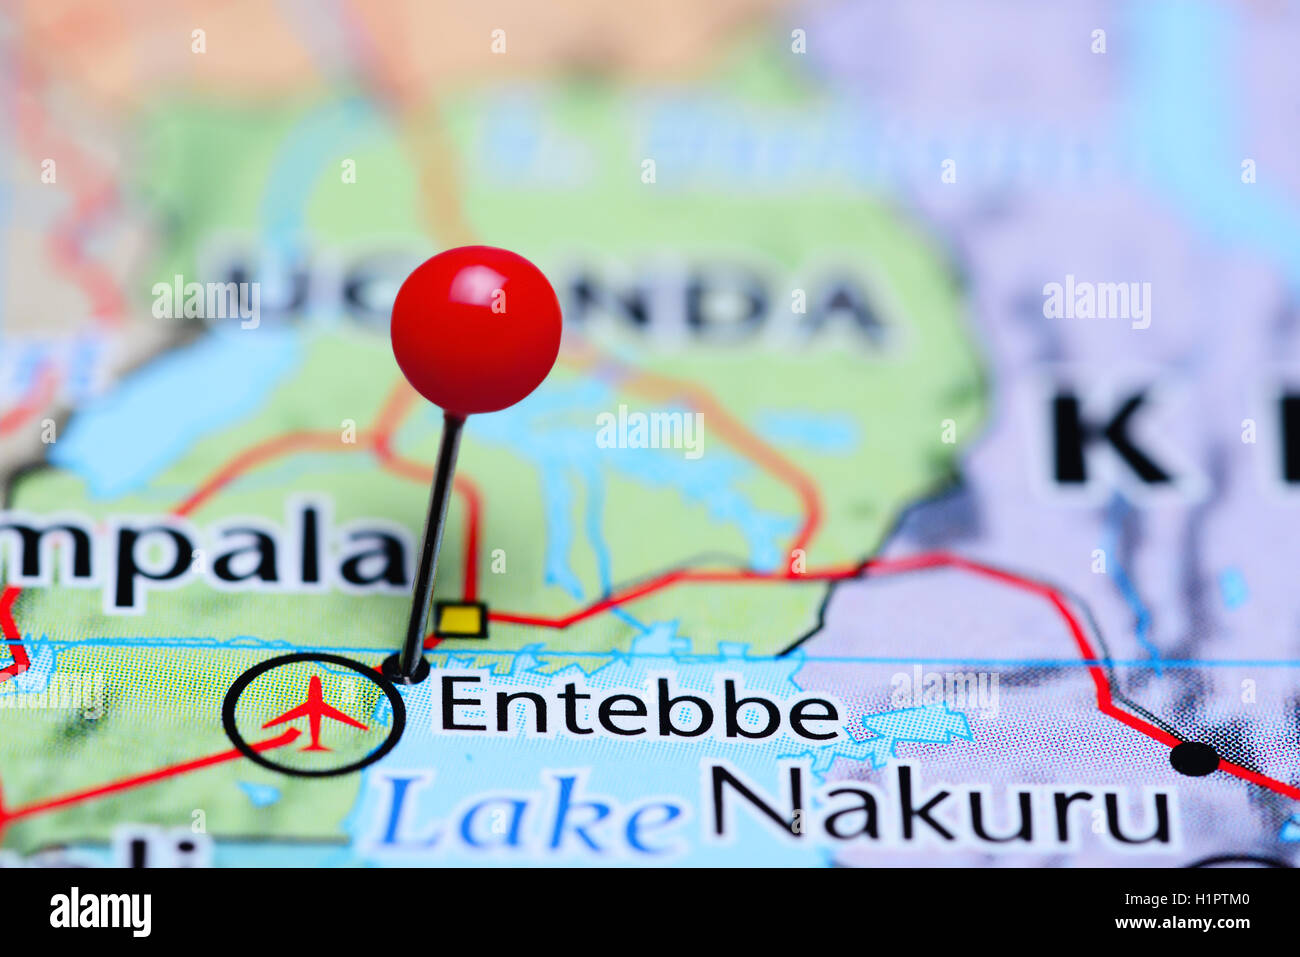 Entebbe pinned on a map of Uganda Stock Photo